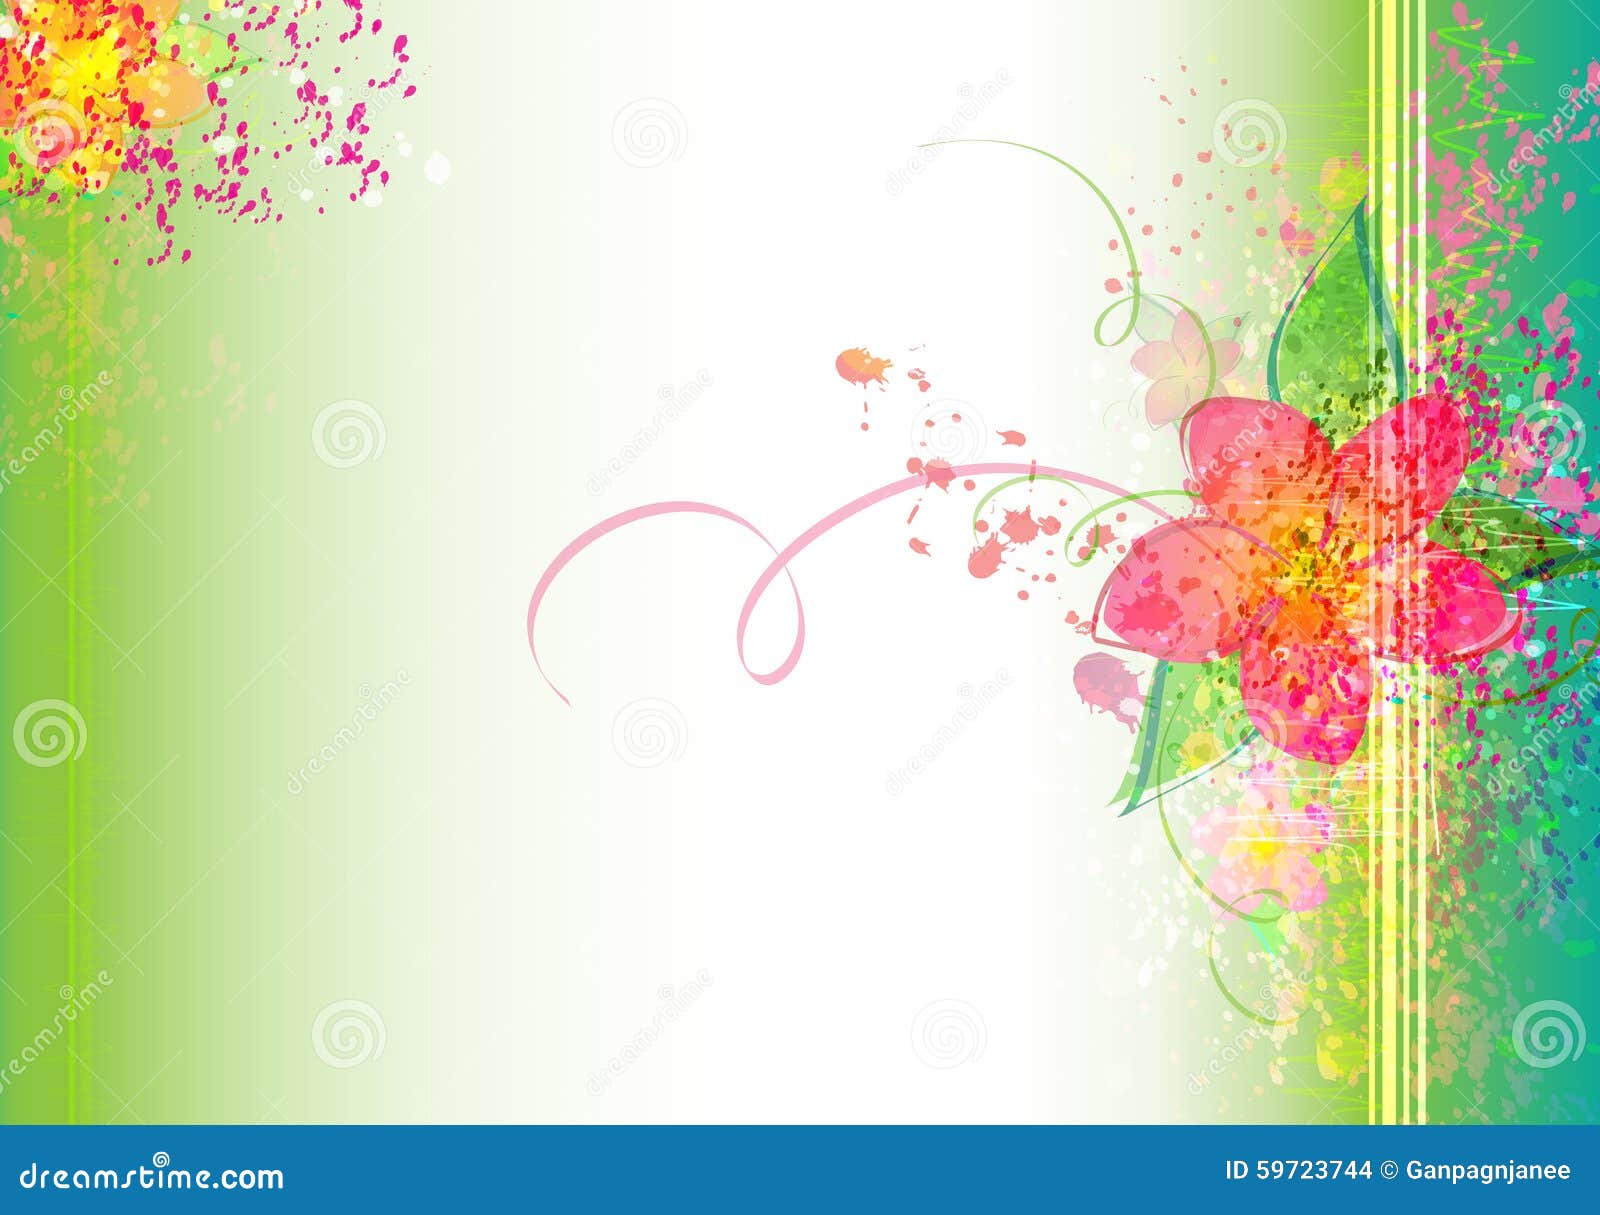 Premium Vector  Watercolor floral border background template frame